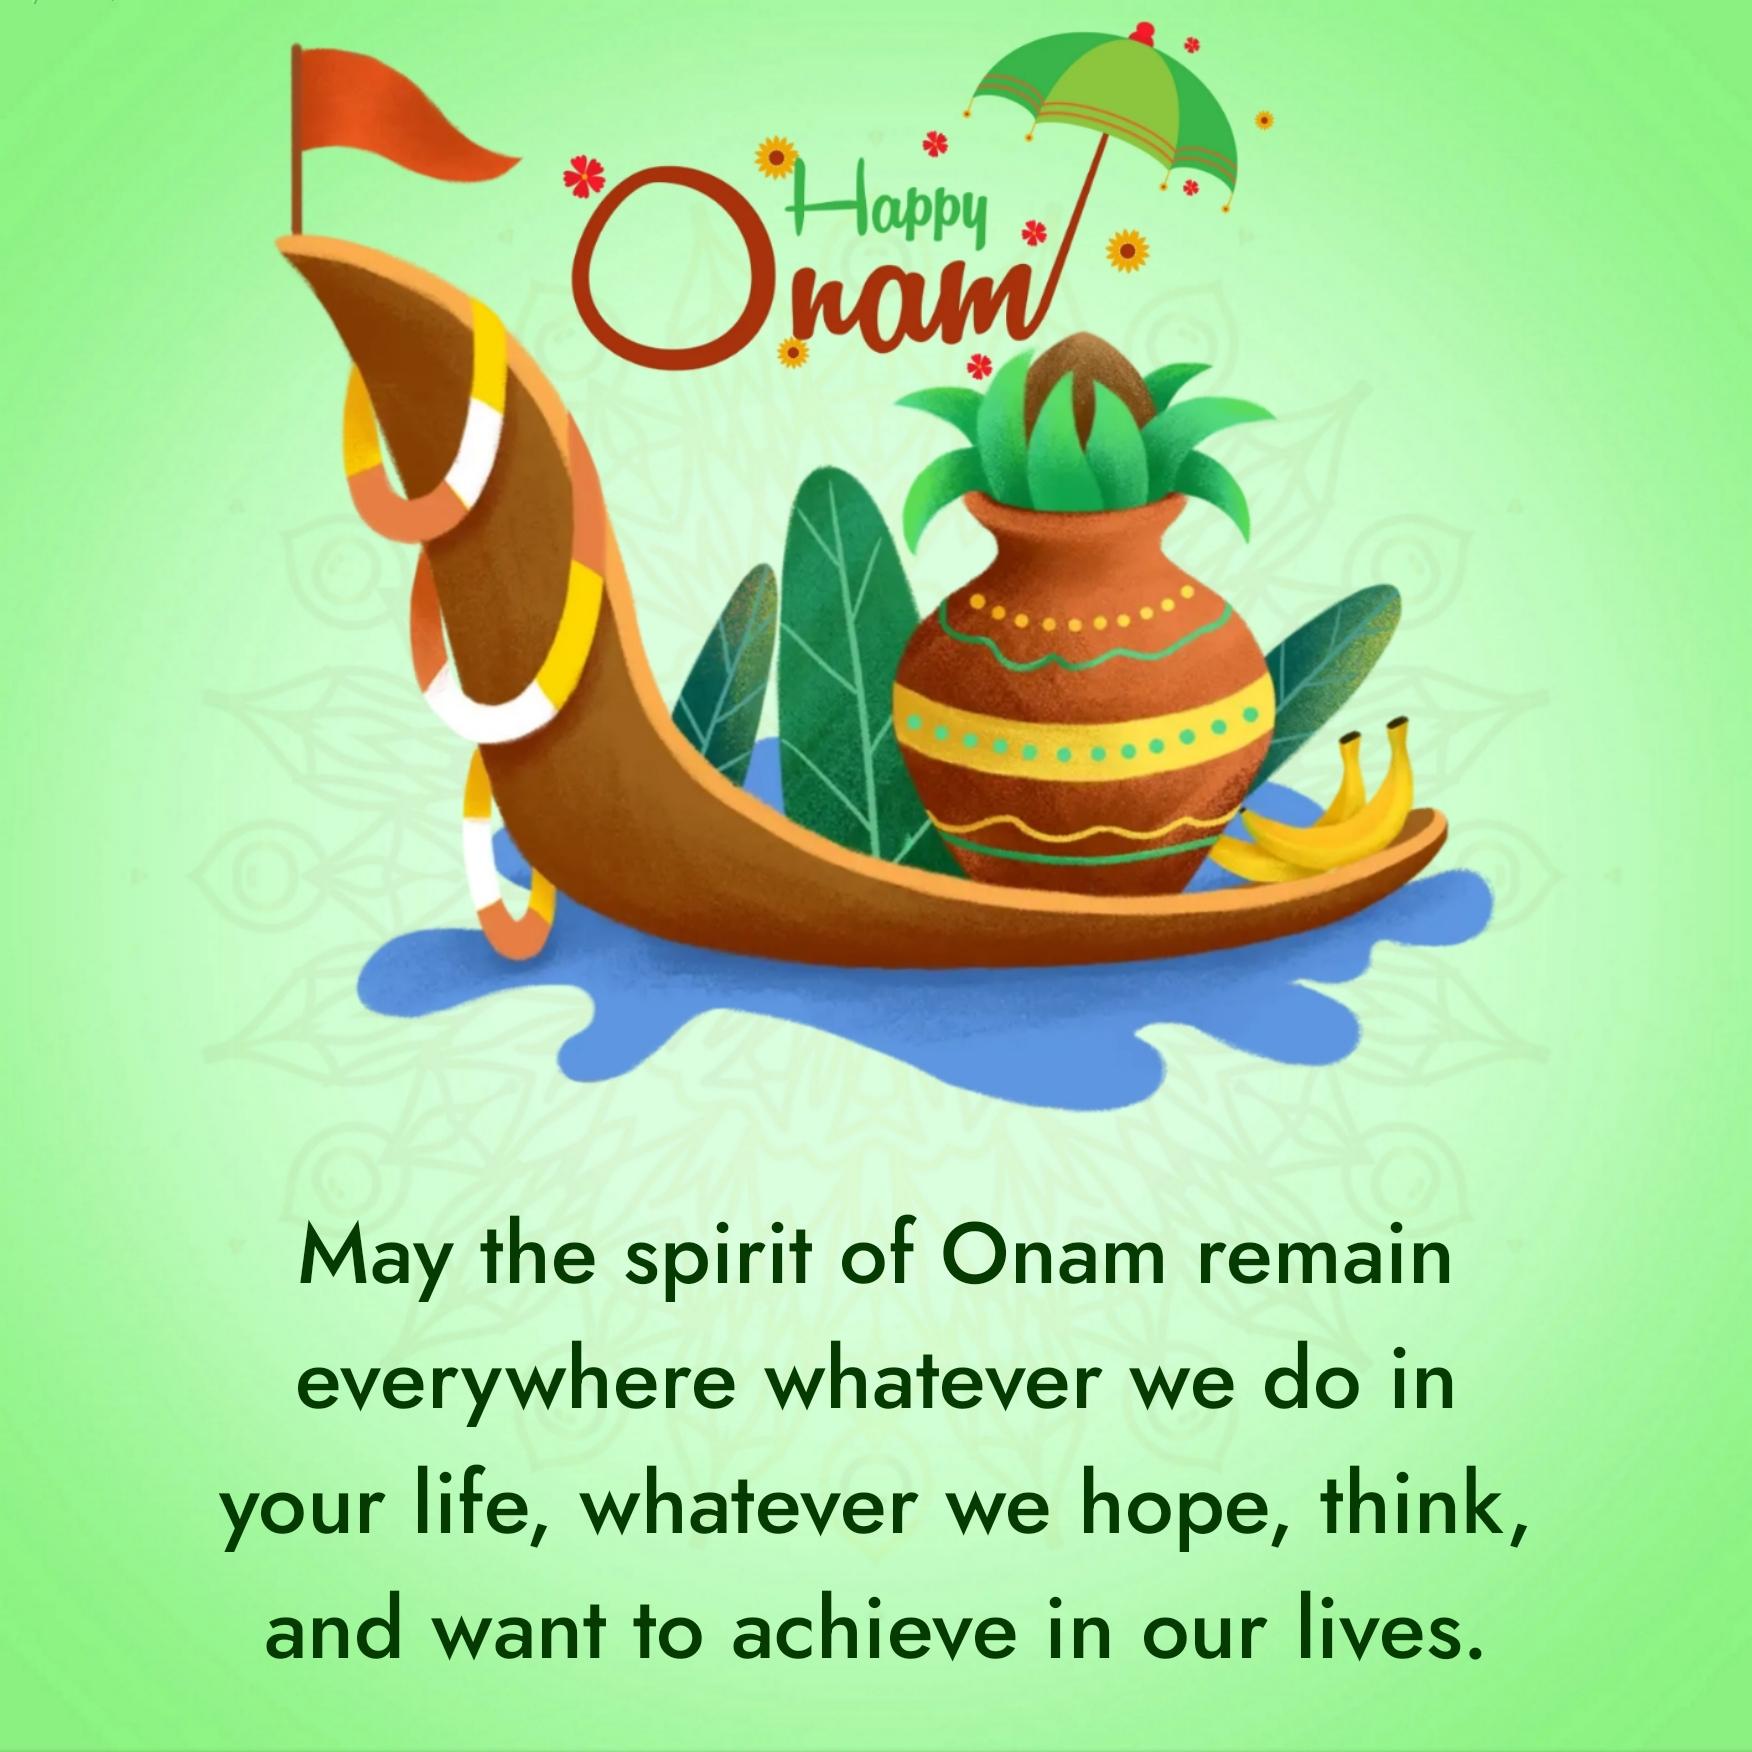 May the spirit of Onam remain everywhere whatever